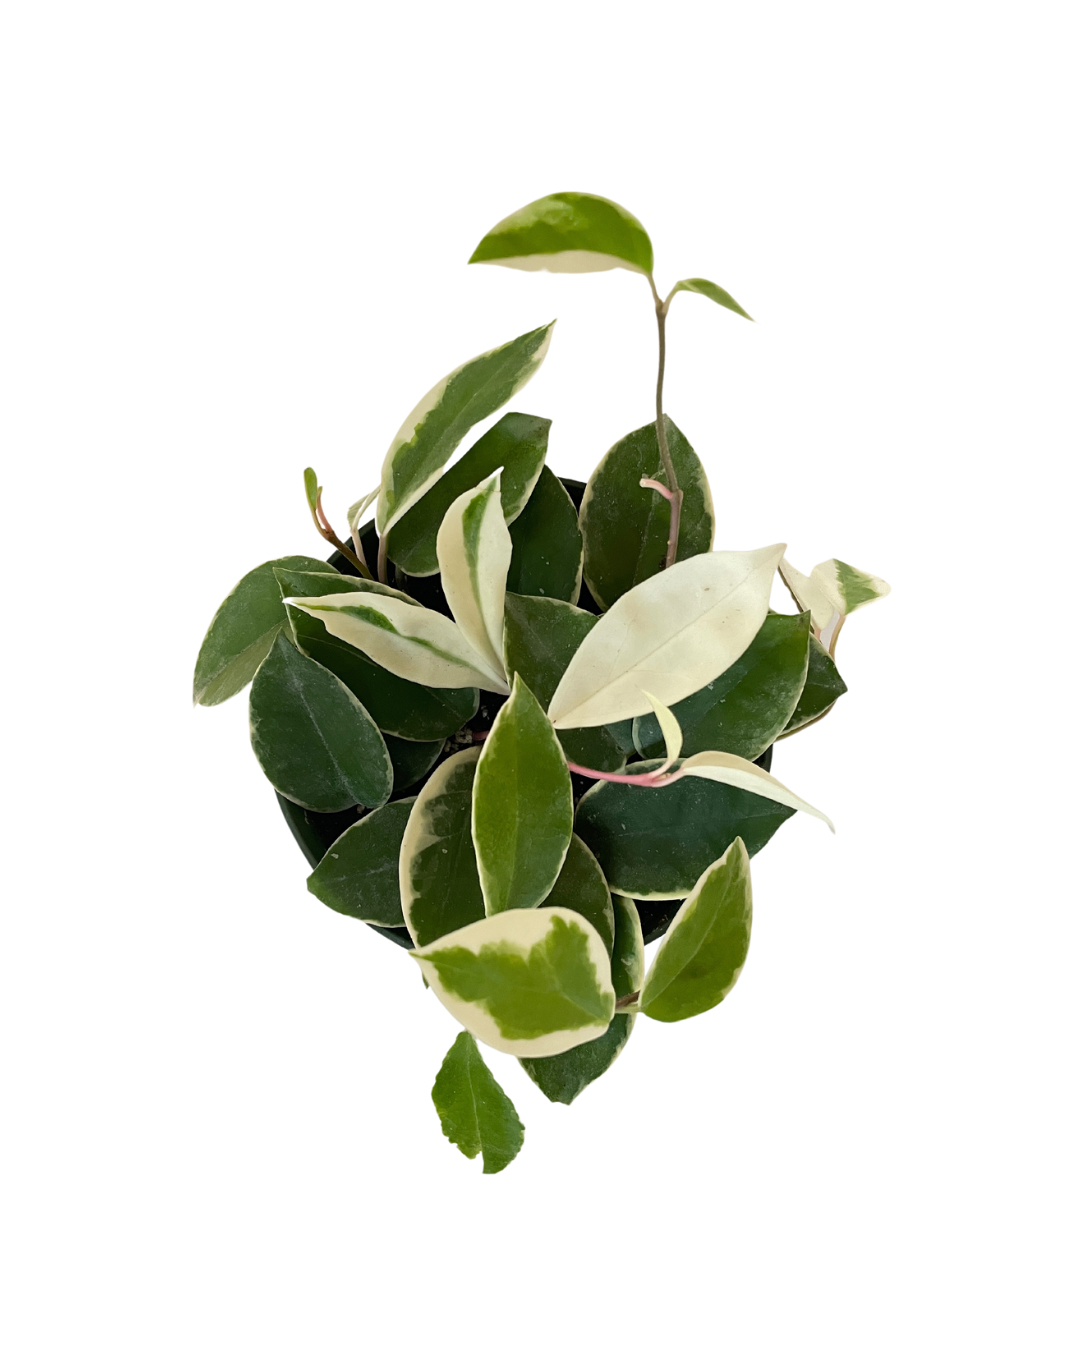 Hoya plant indoor tropical